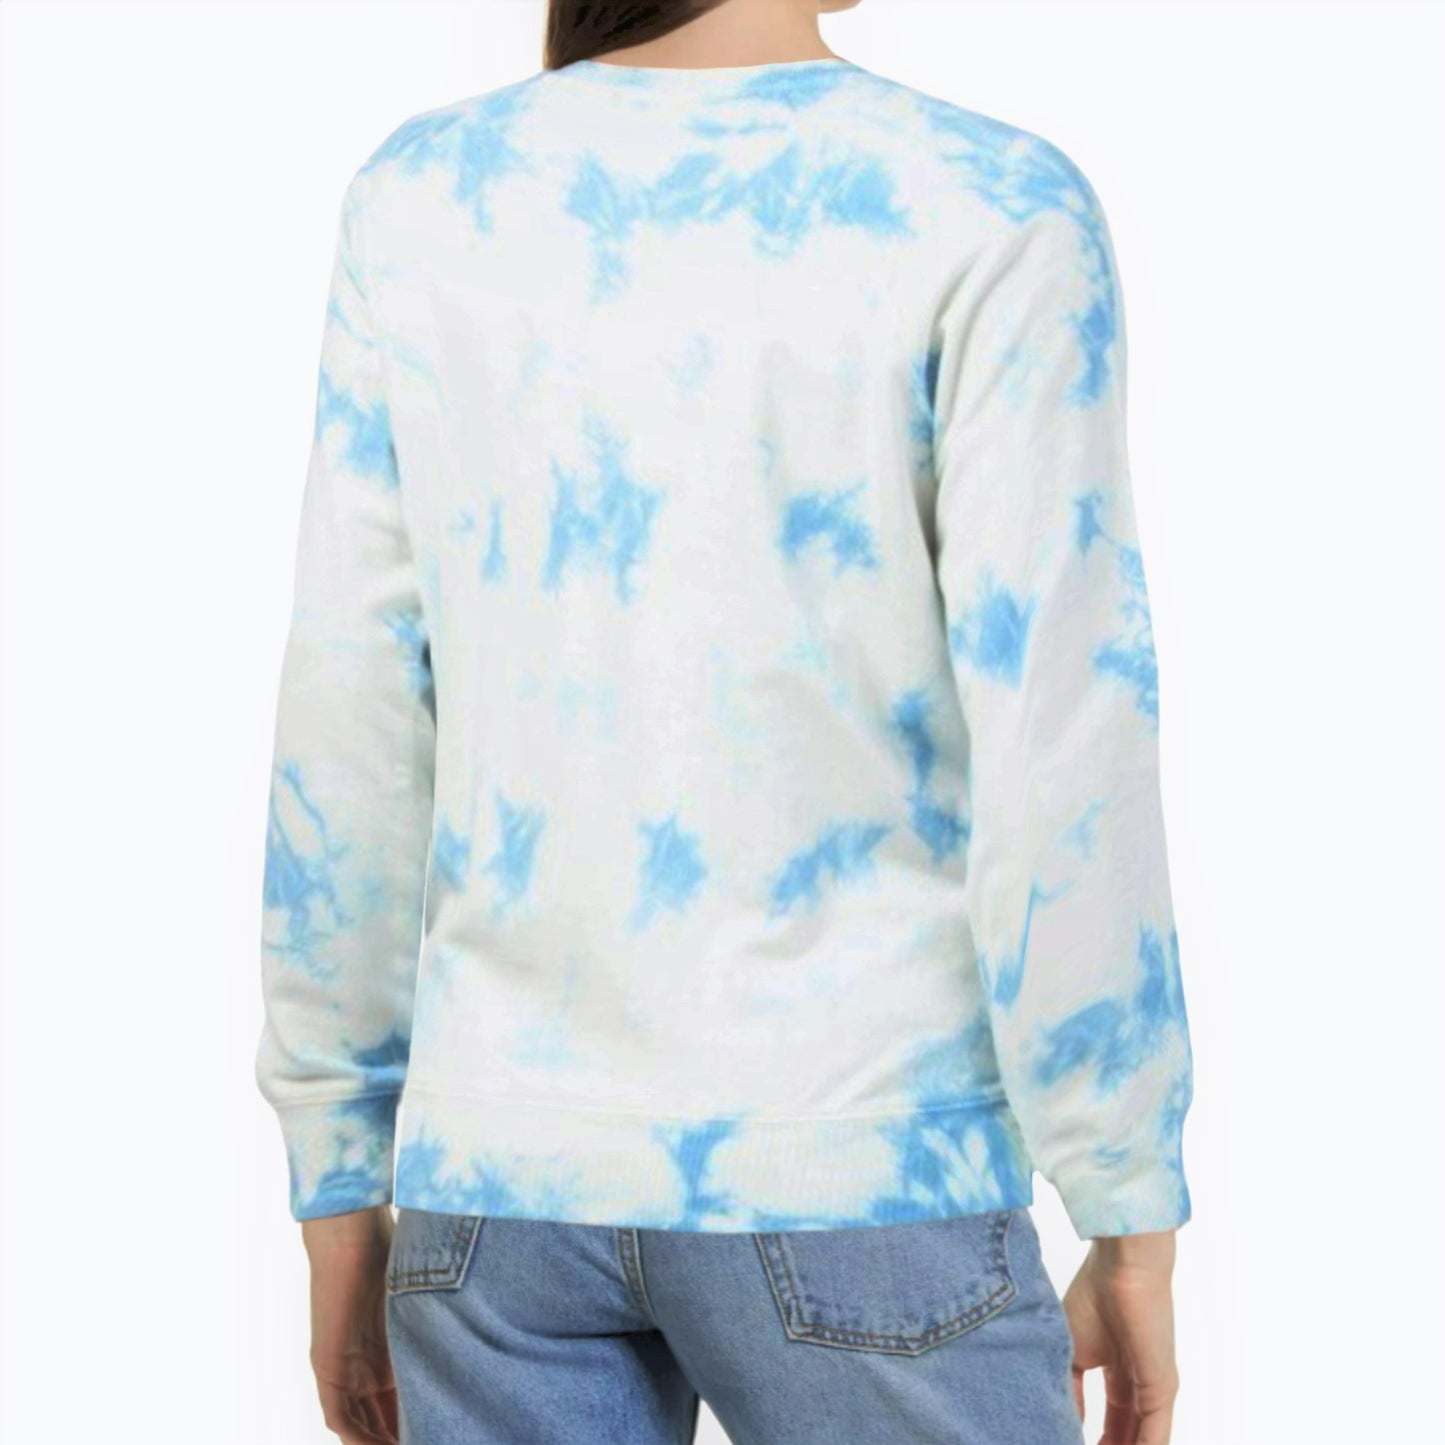 Lucky Brand Women's Tie Dye Print Soft Cotton Casual Sweatshirt Top